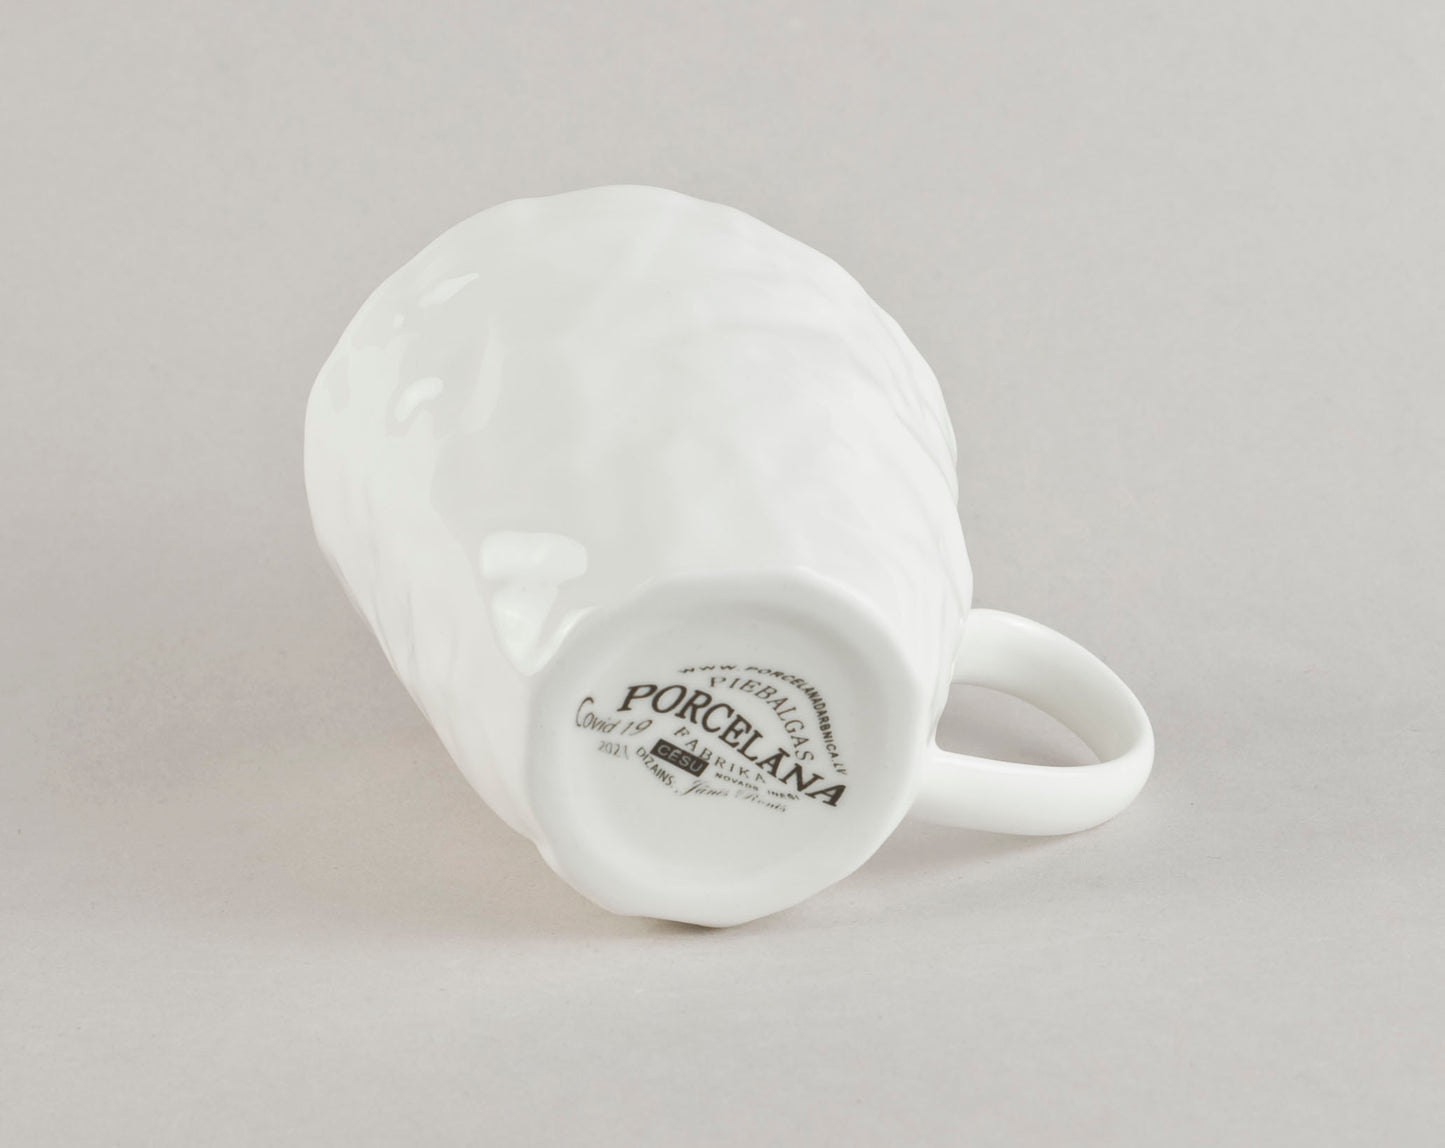 Covid 2.8. Crumpled Coffee Co Mug